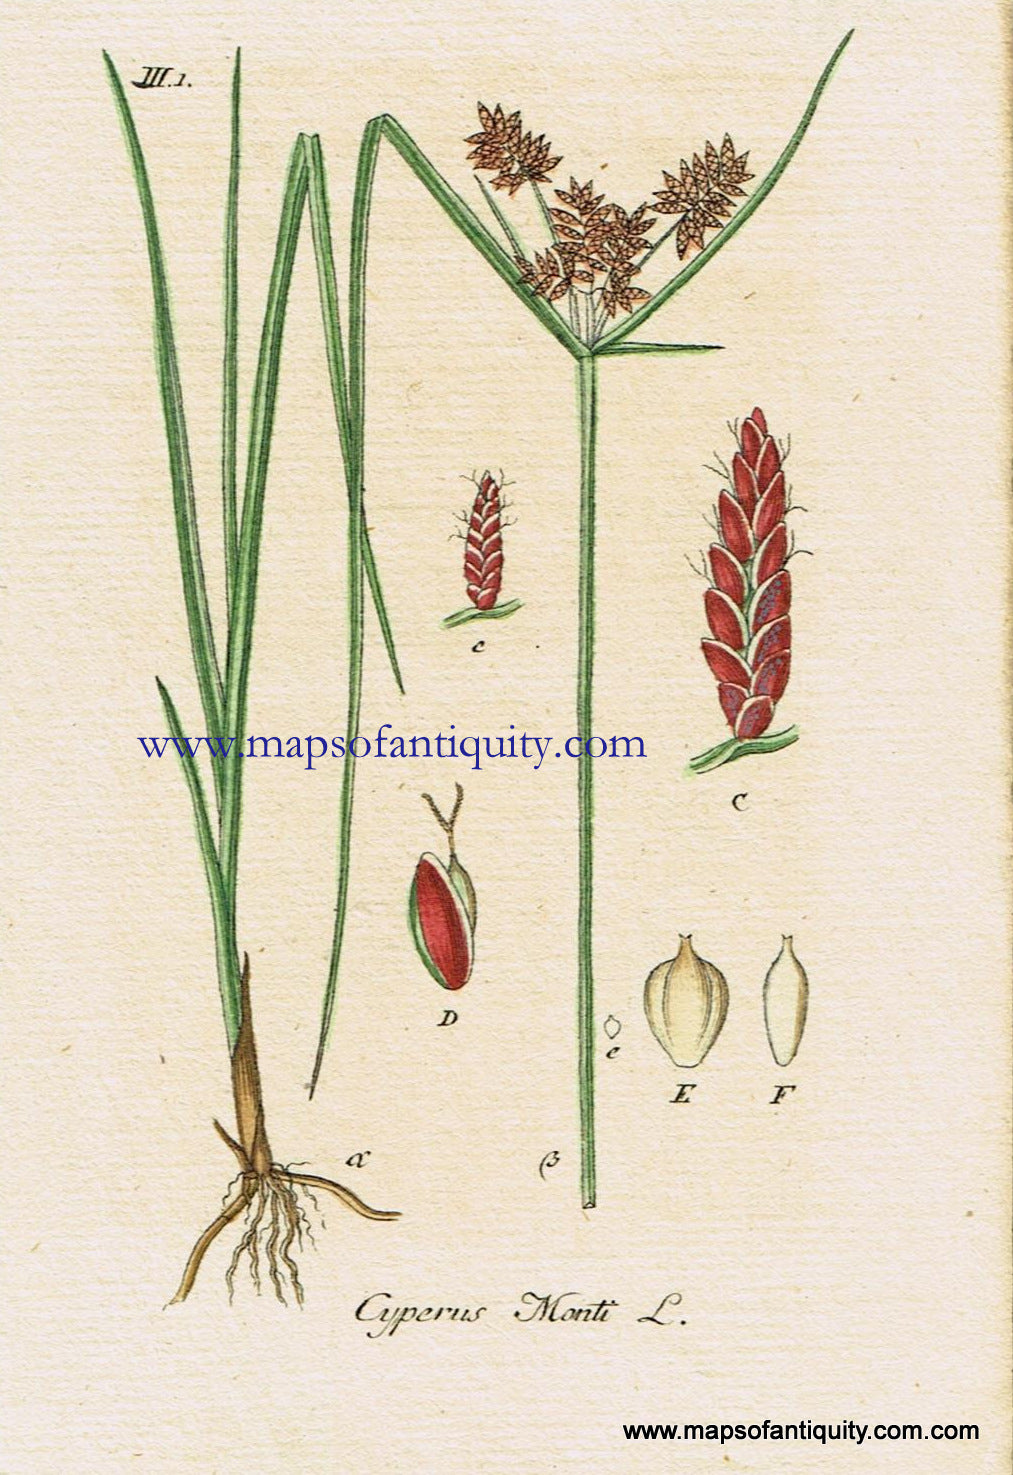 Antique-Hand-Colored-Botanical-Print-Cyperus-Monti-L.-or-Mountain-Nutsedge-Botanical-Illustration-Antique-Prints--Natural-History-Botanical-1828-Jacob-Sturm-Maps-Of-Antiquity